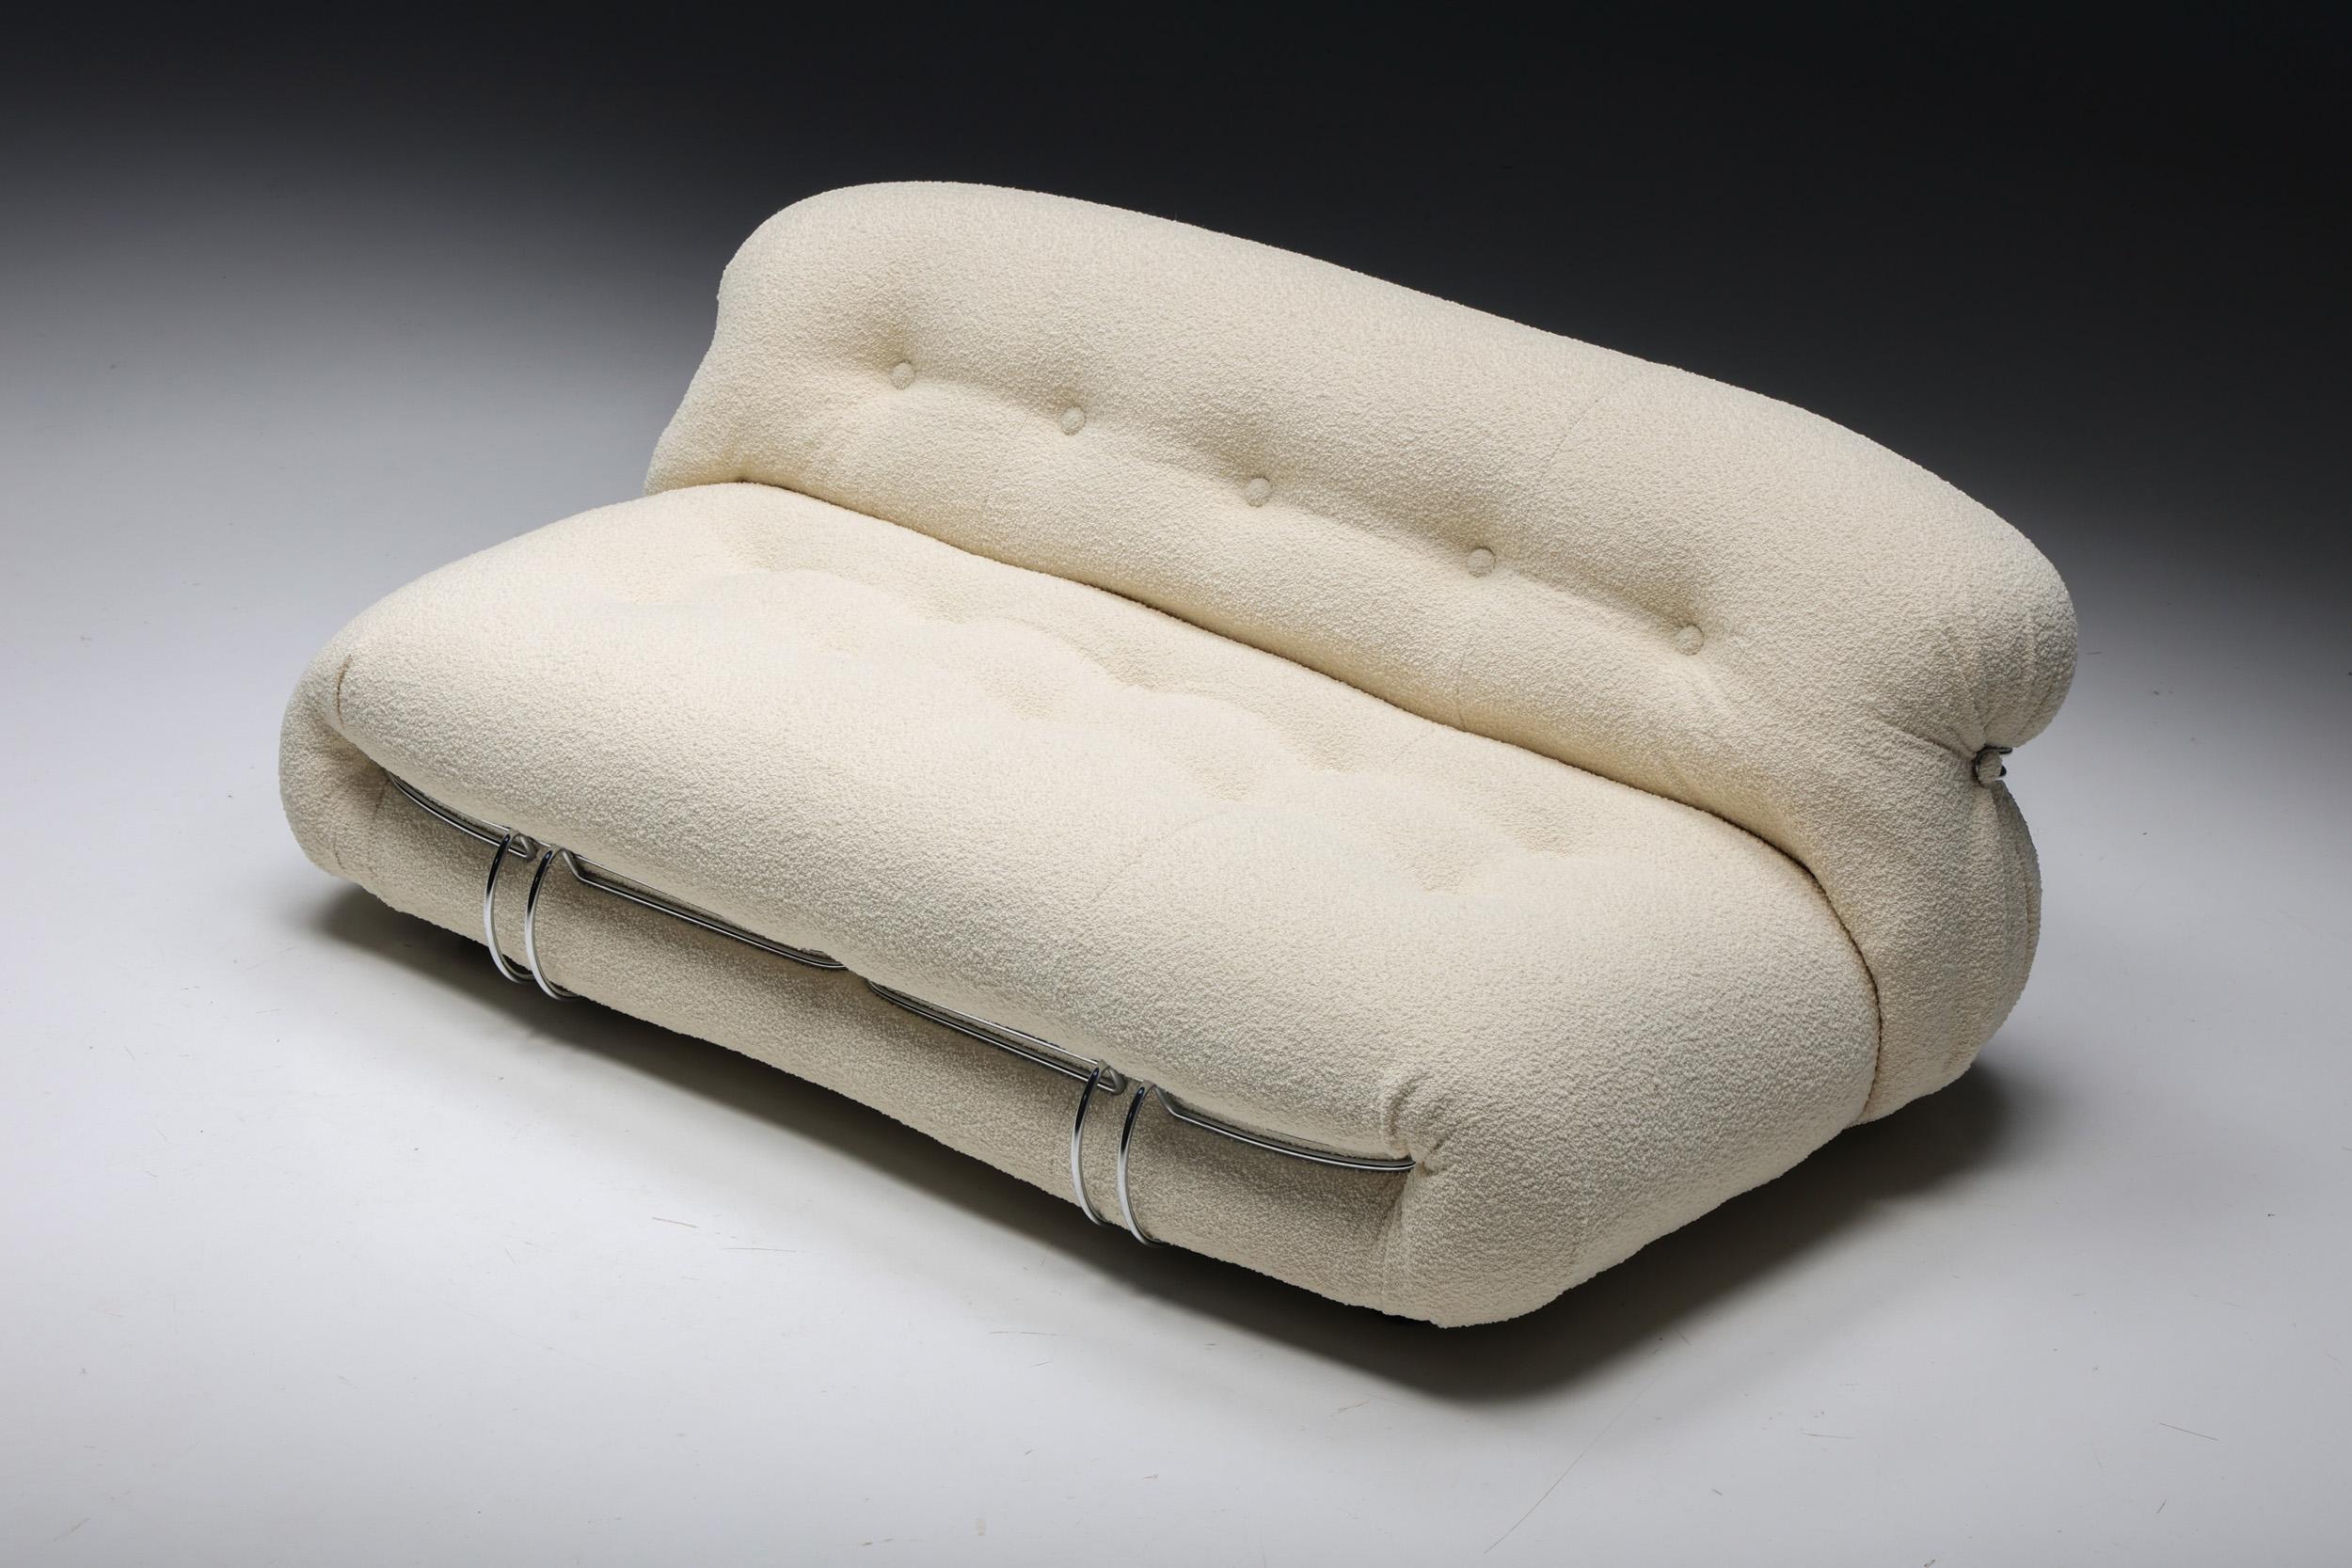 Mid-Century Modern Scarpa Soriana Sofa for Cassina, Bouclé Wool, Italy, 1970s For Sale